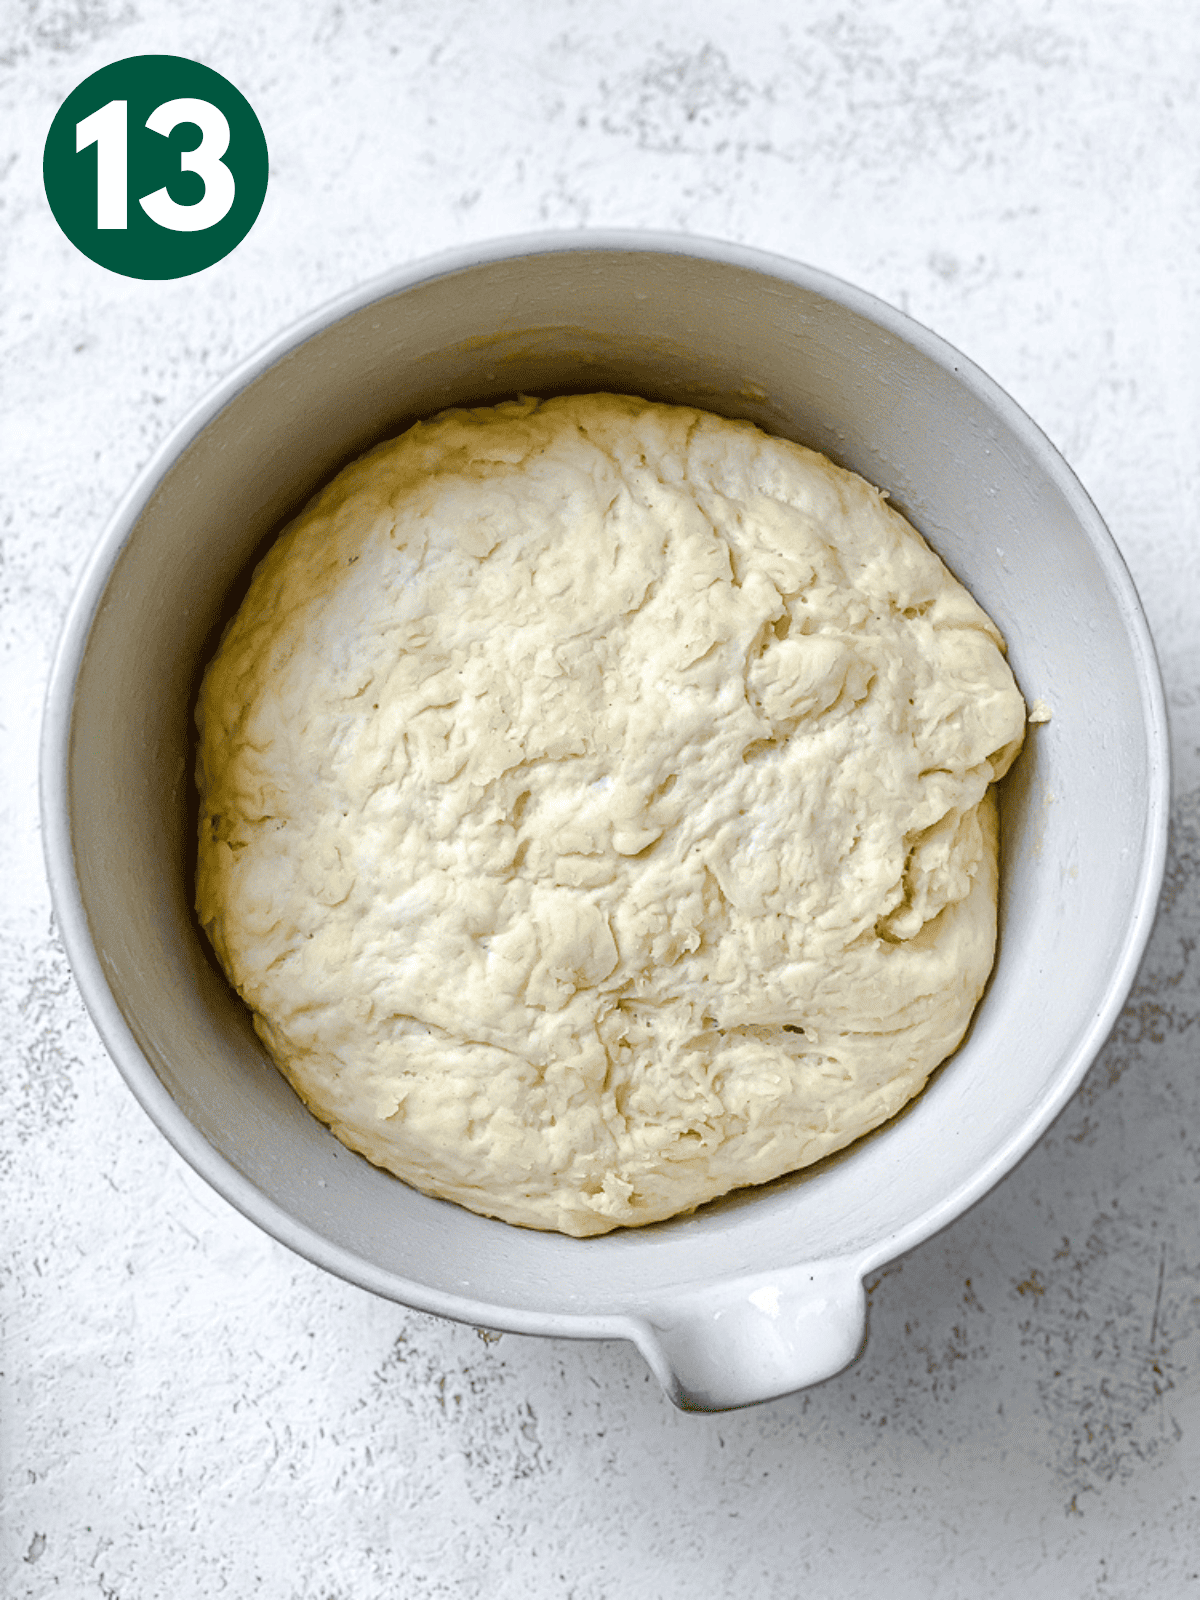 risen dough in a large white bowl.